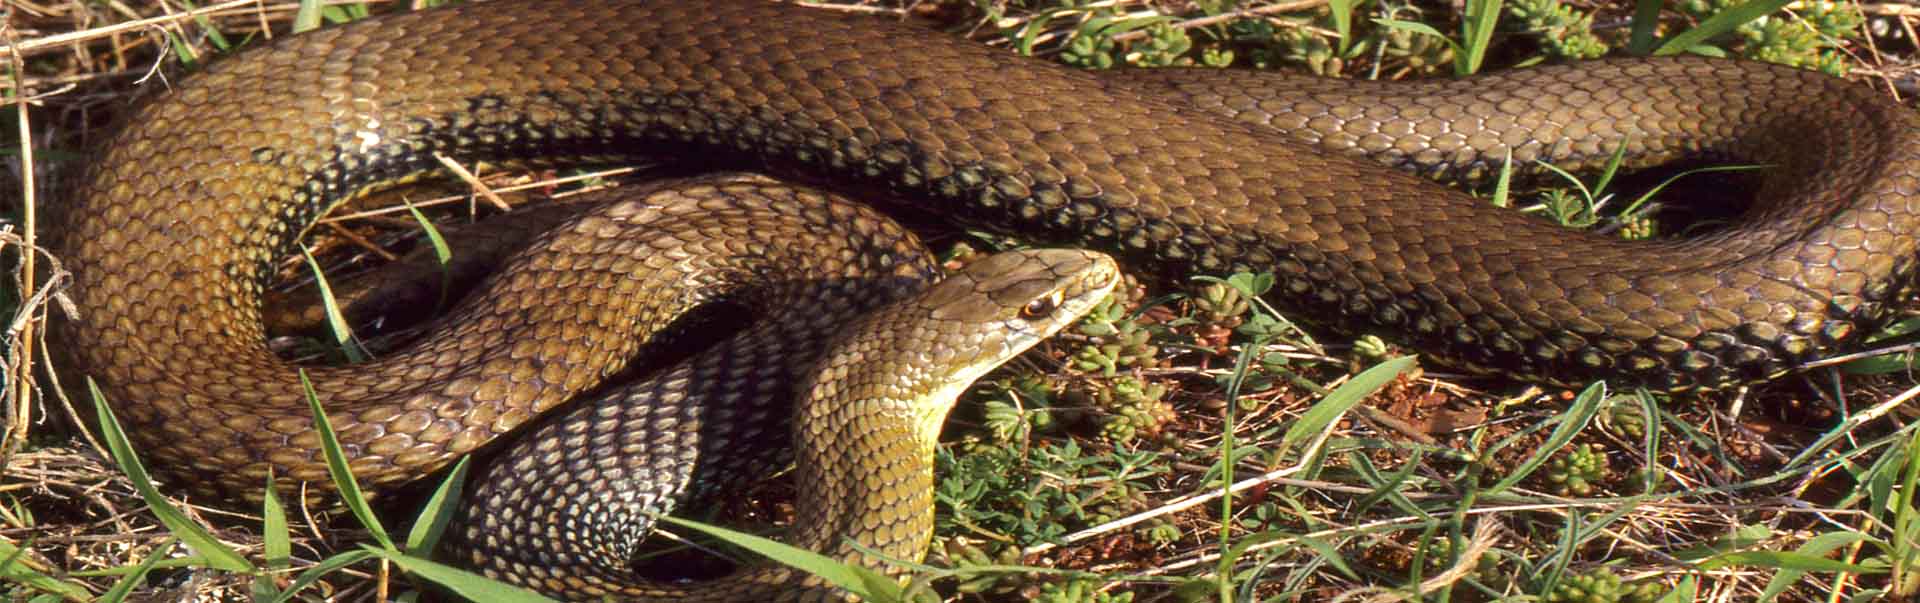 A Cyprus Snake